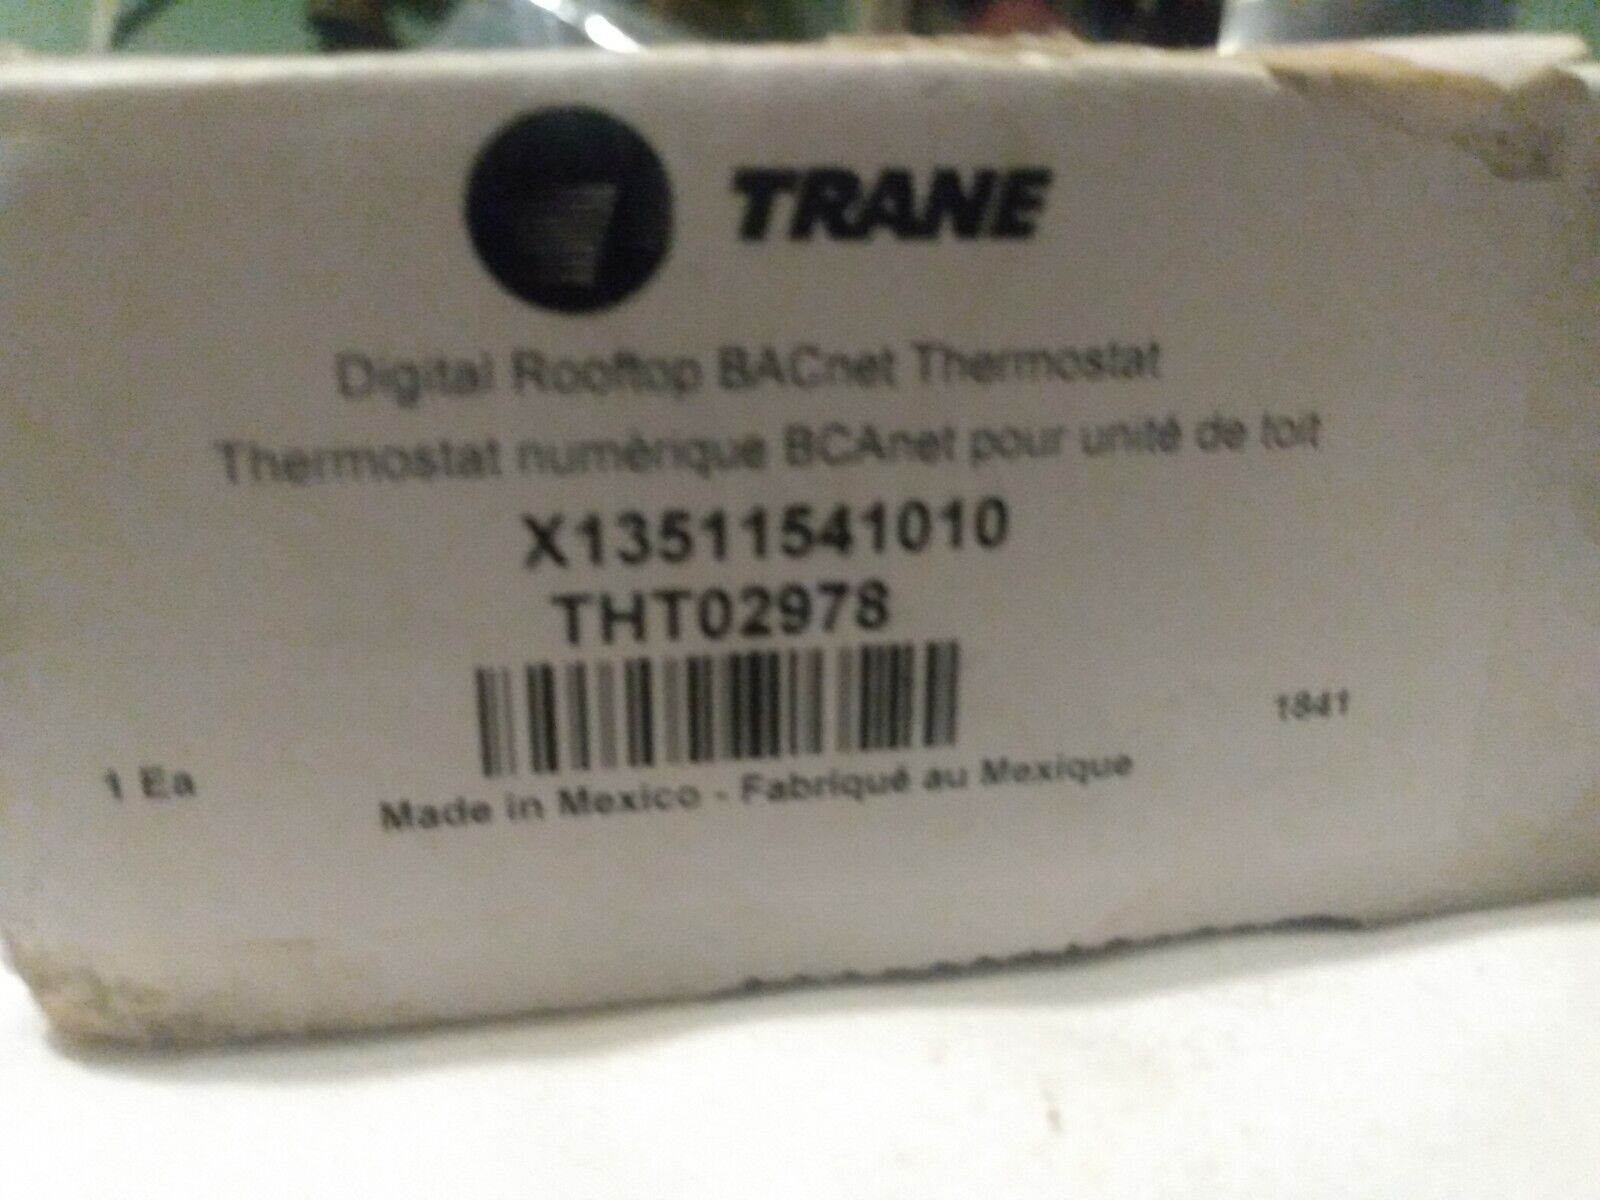 TRANE DIGITAL ROOFTOP BACNET THERMOSTAT-X13511541010-THT02978